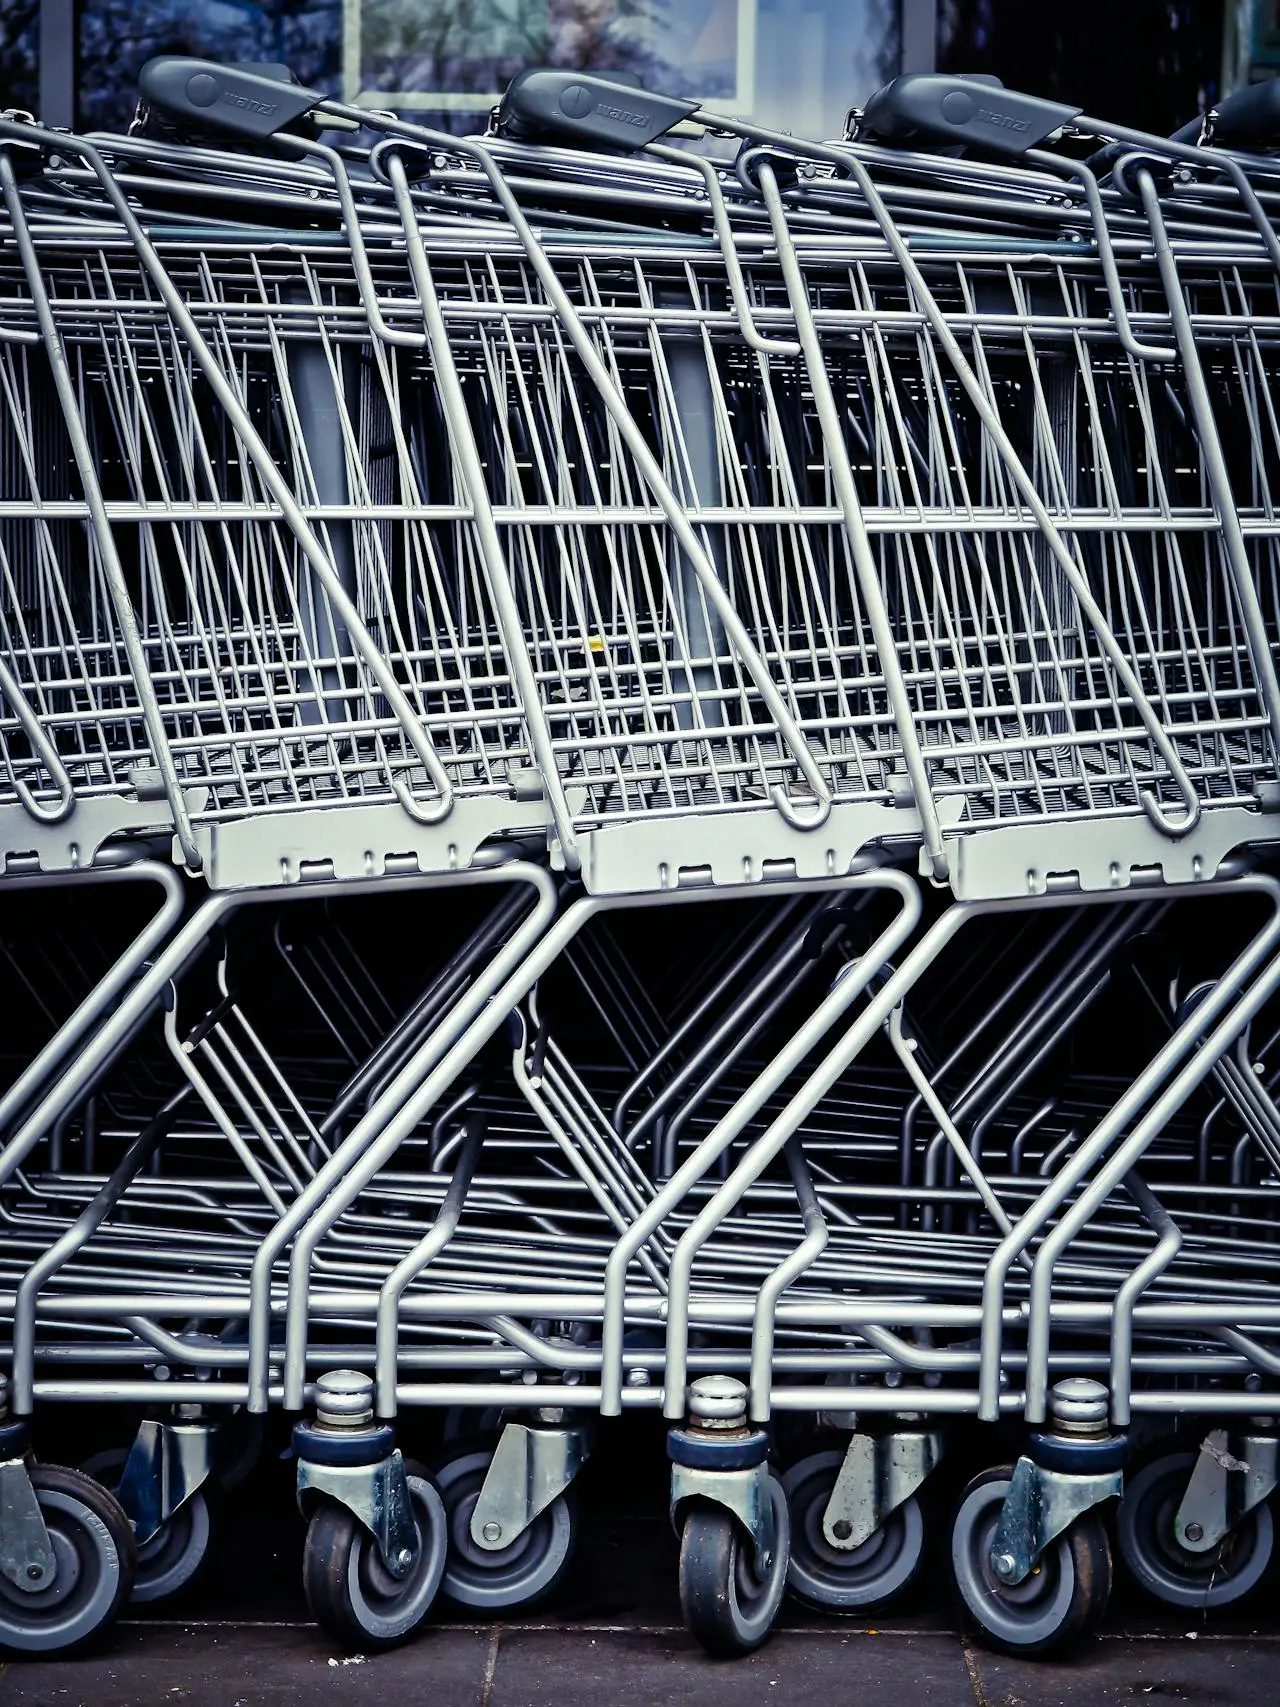 a row of shopping carts